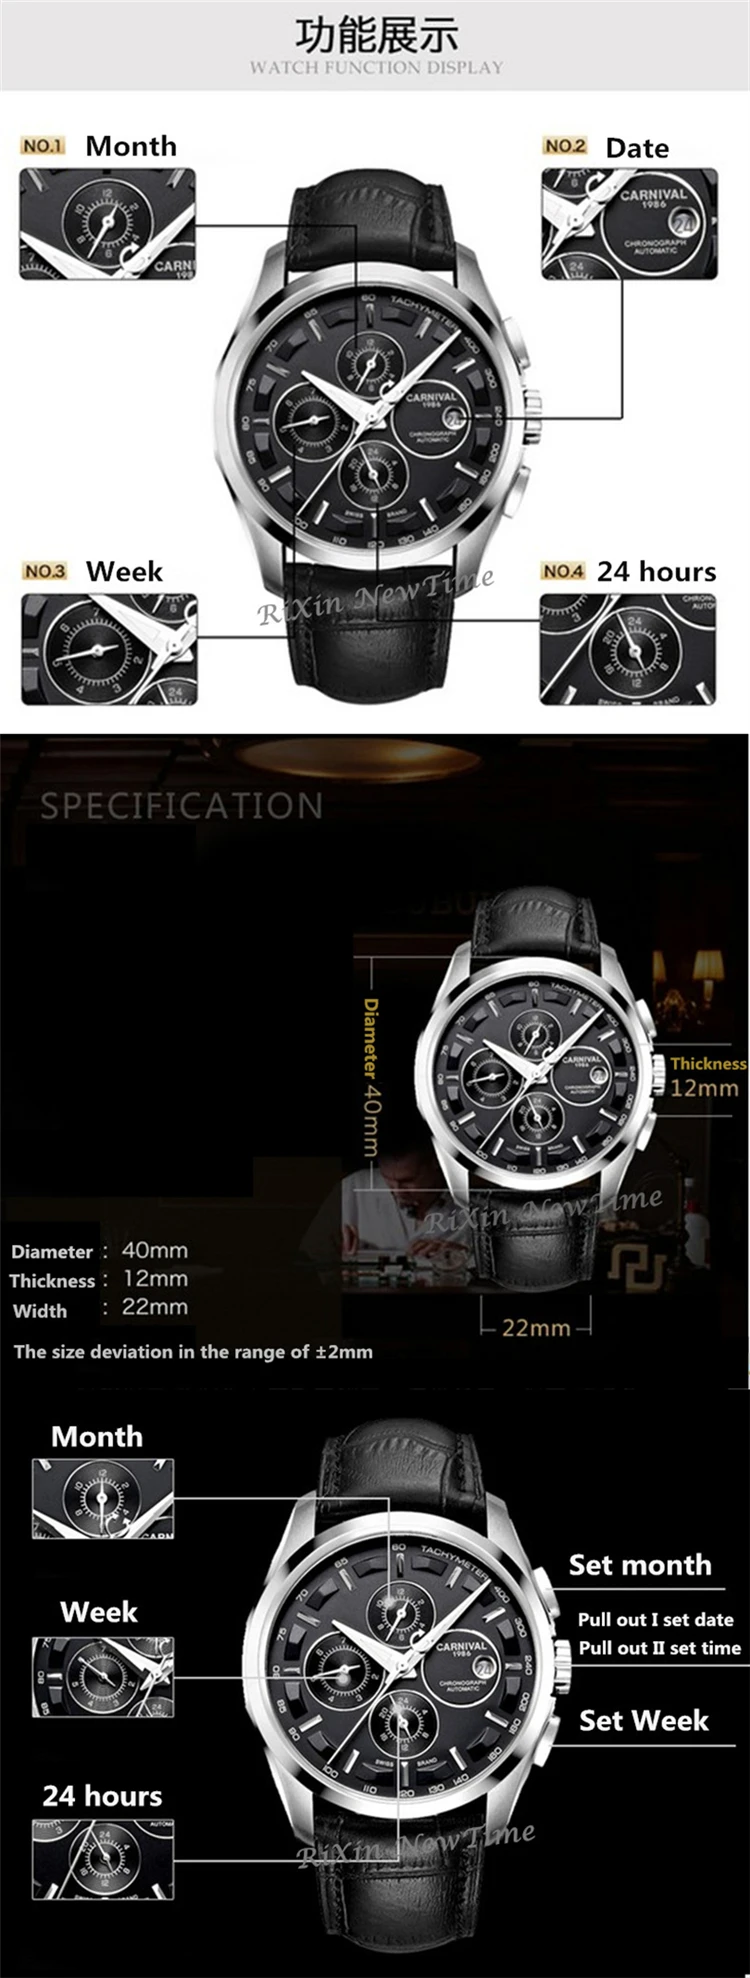 Carnival8659メンズラグジュアリー自動機械式腕時計ファッションレザーストラップウォッチ防水100m時計relogio Reloj Buy 男性機械式時計 腕時計自動 カーニバルメンズ腕時計 Product On Alibaba Com